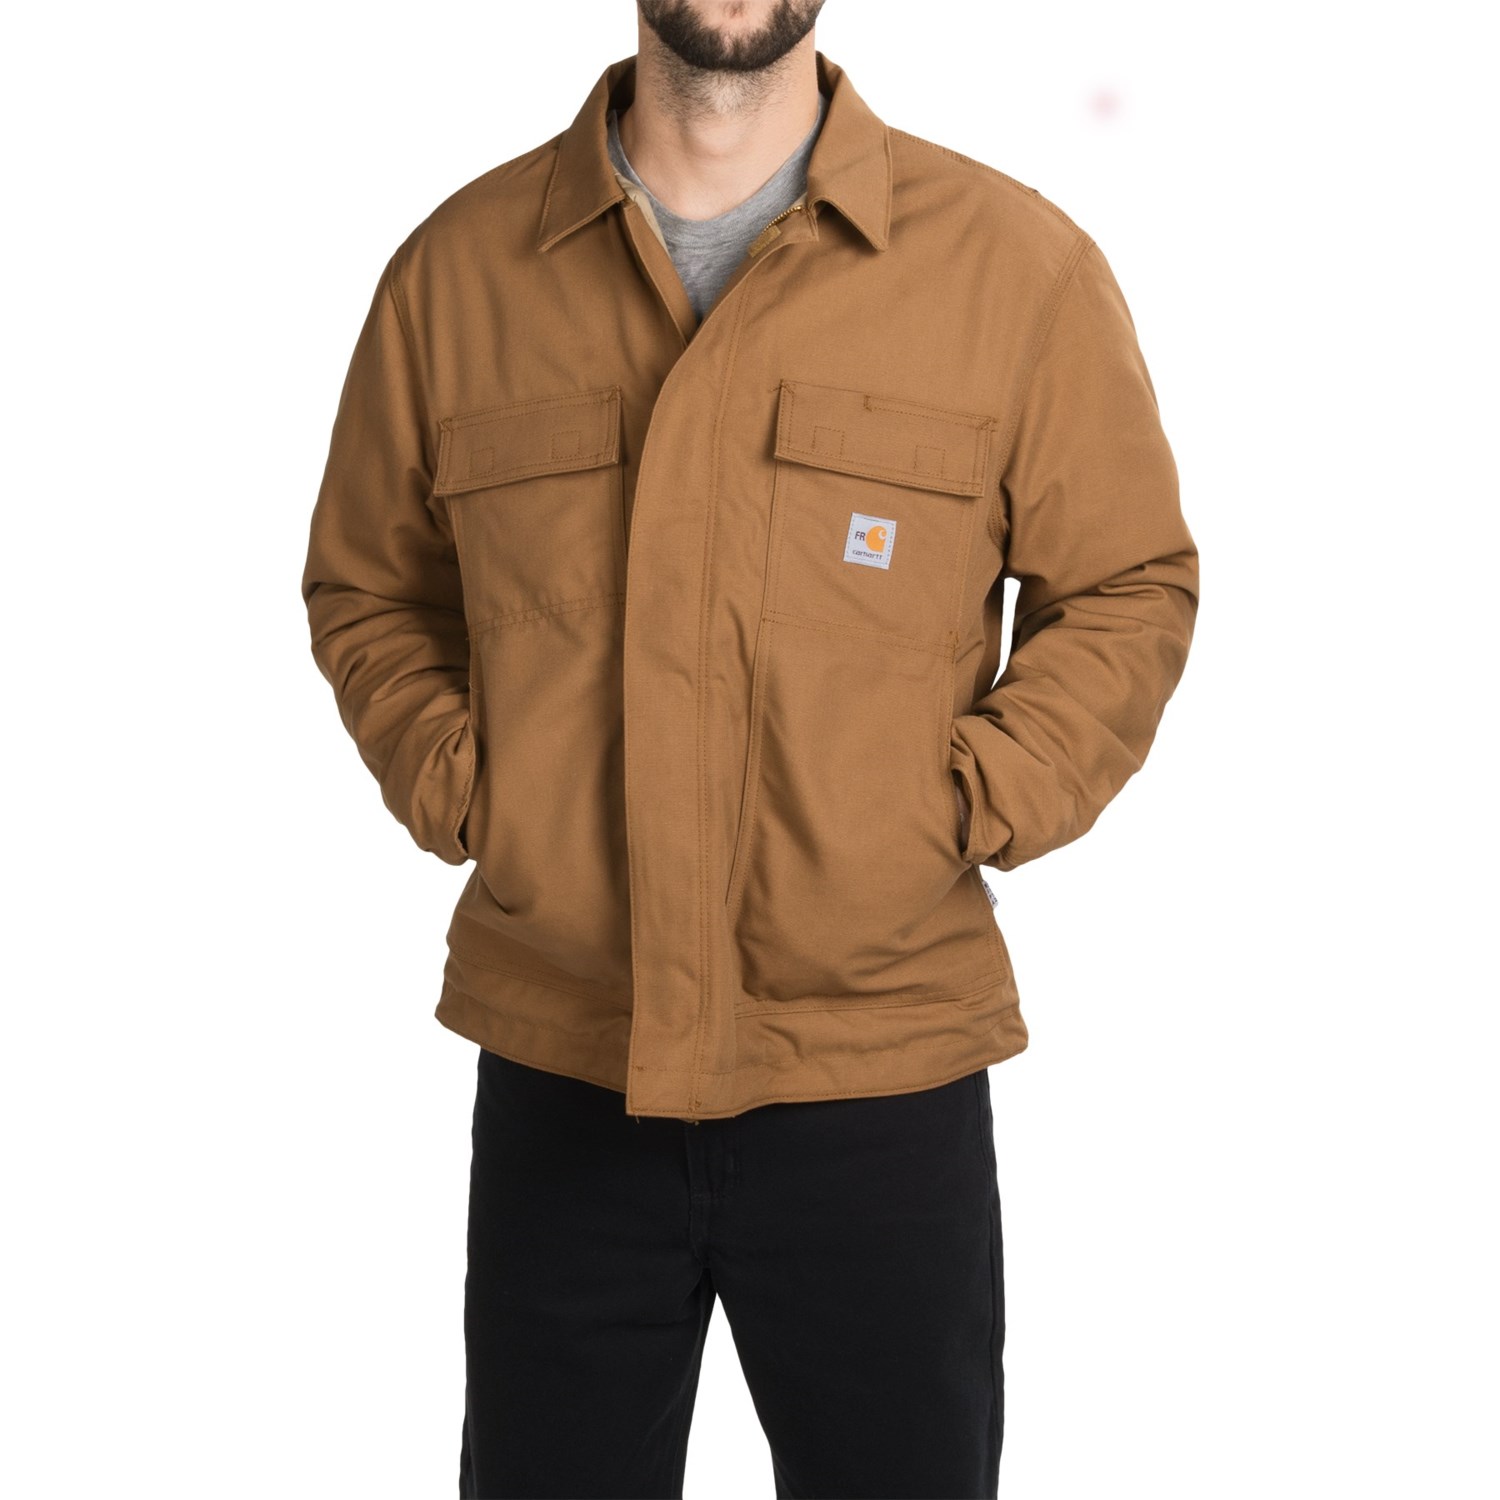 Carhartt Flame-Resistant Lanyard Access Jacket (For Men)